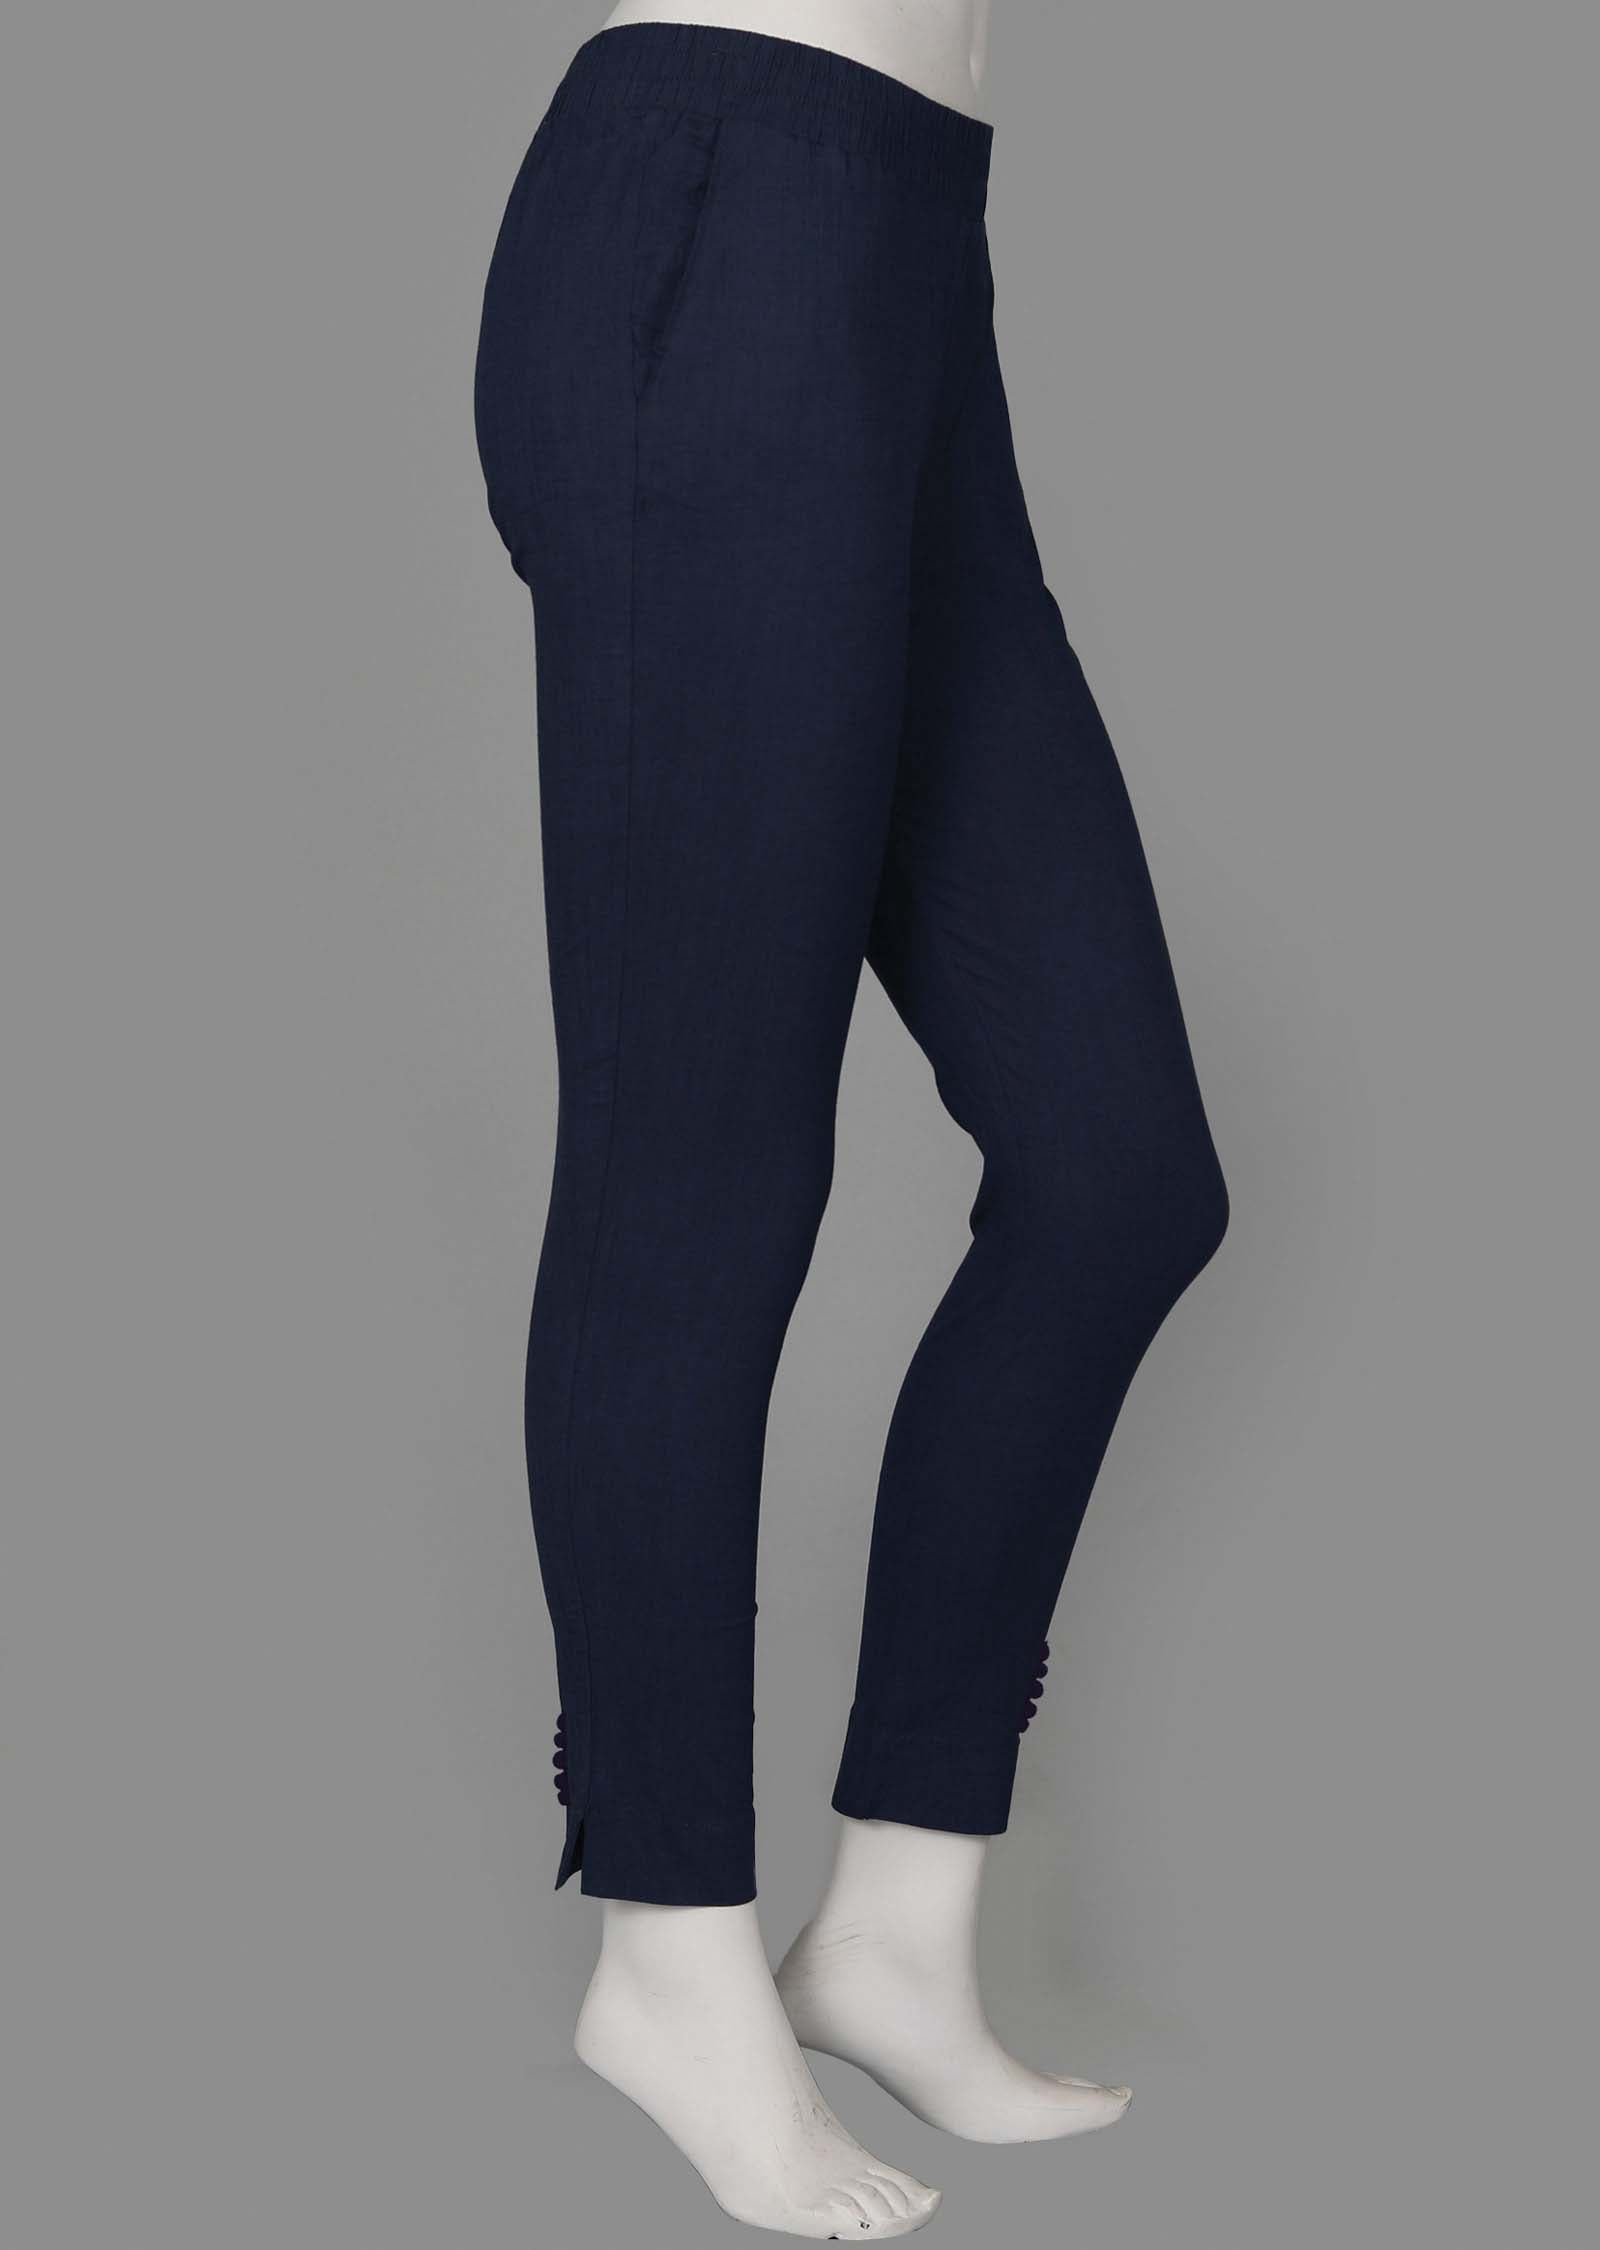 Navy Blue Potli button Pants